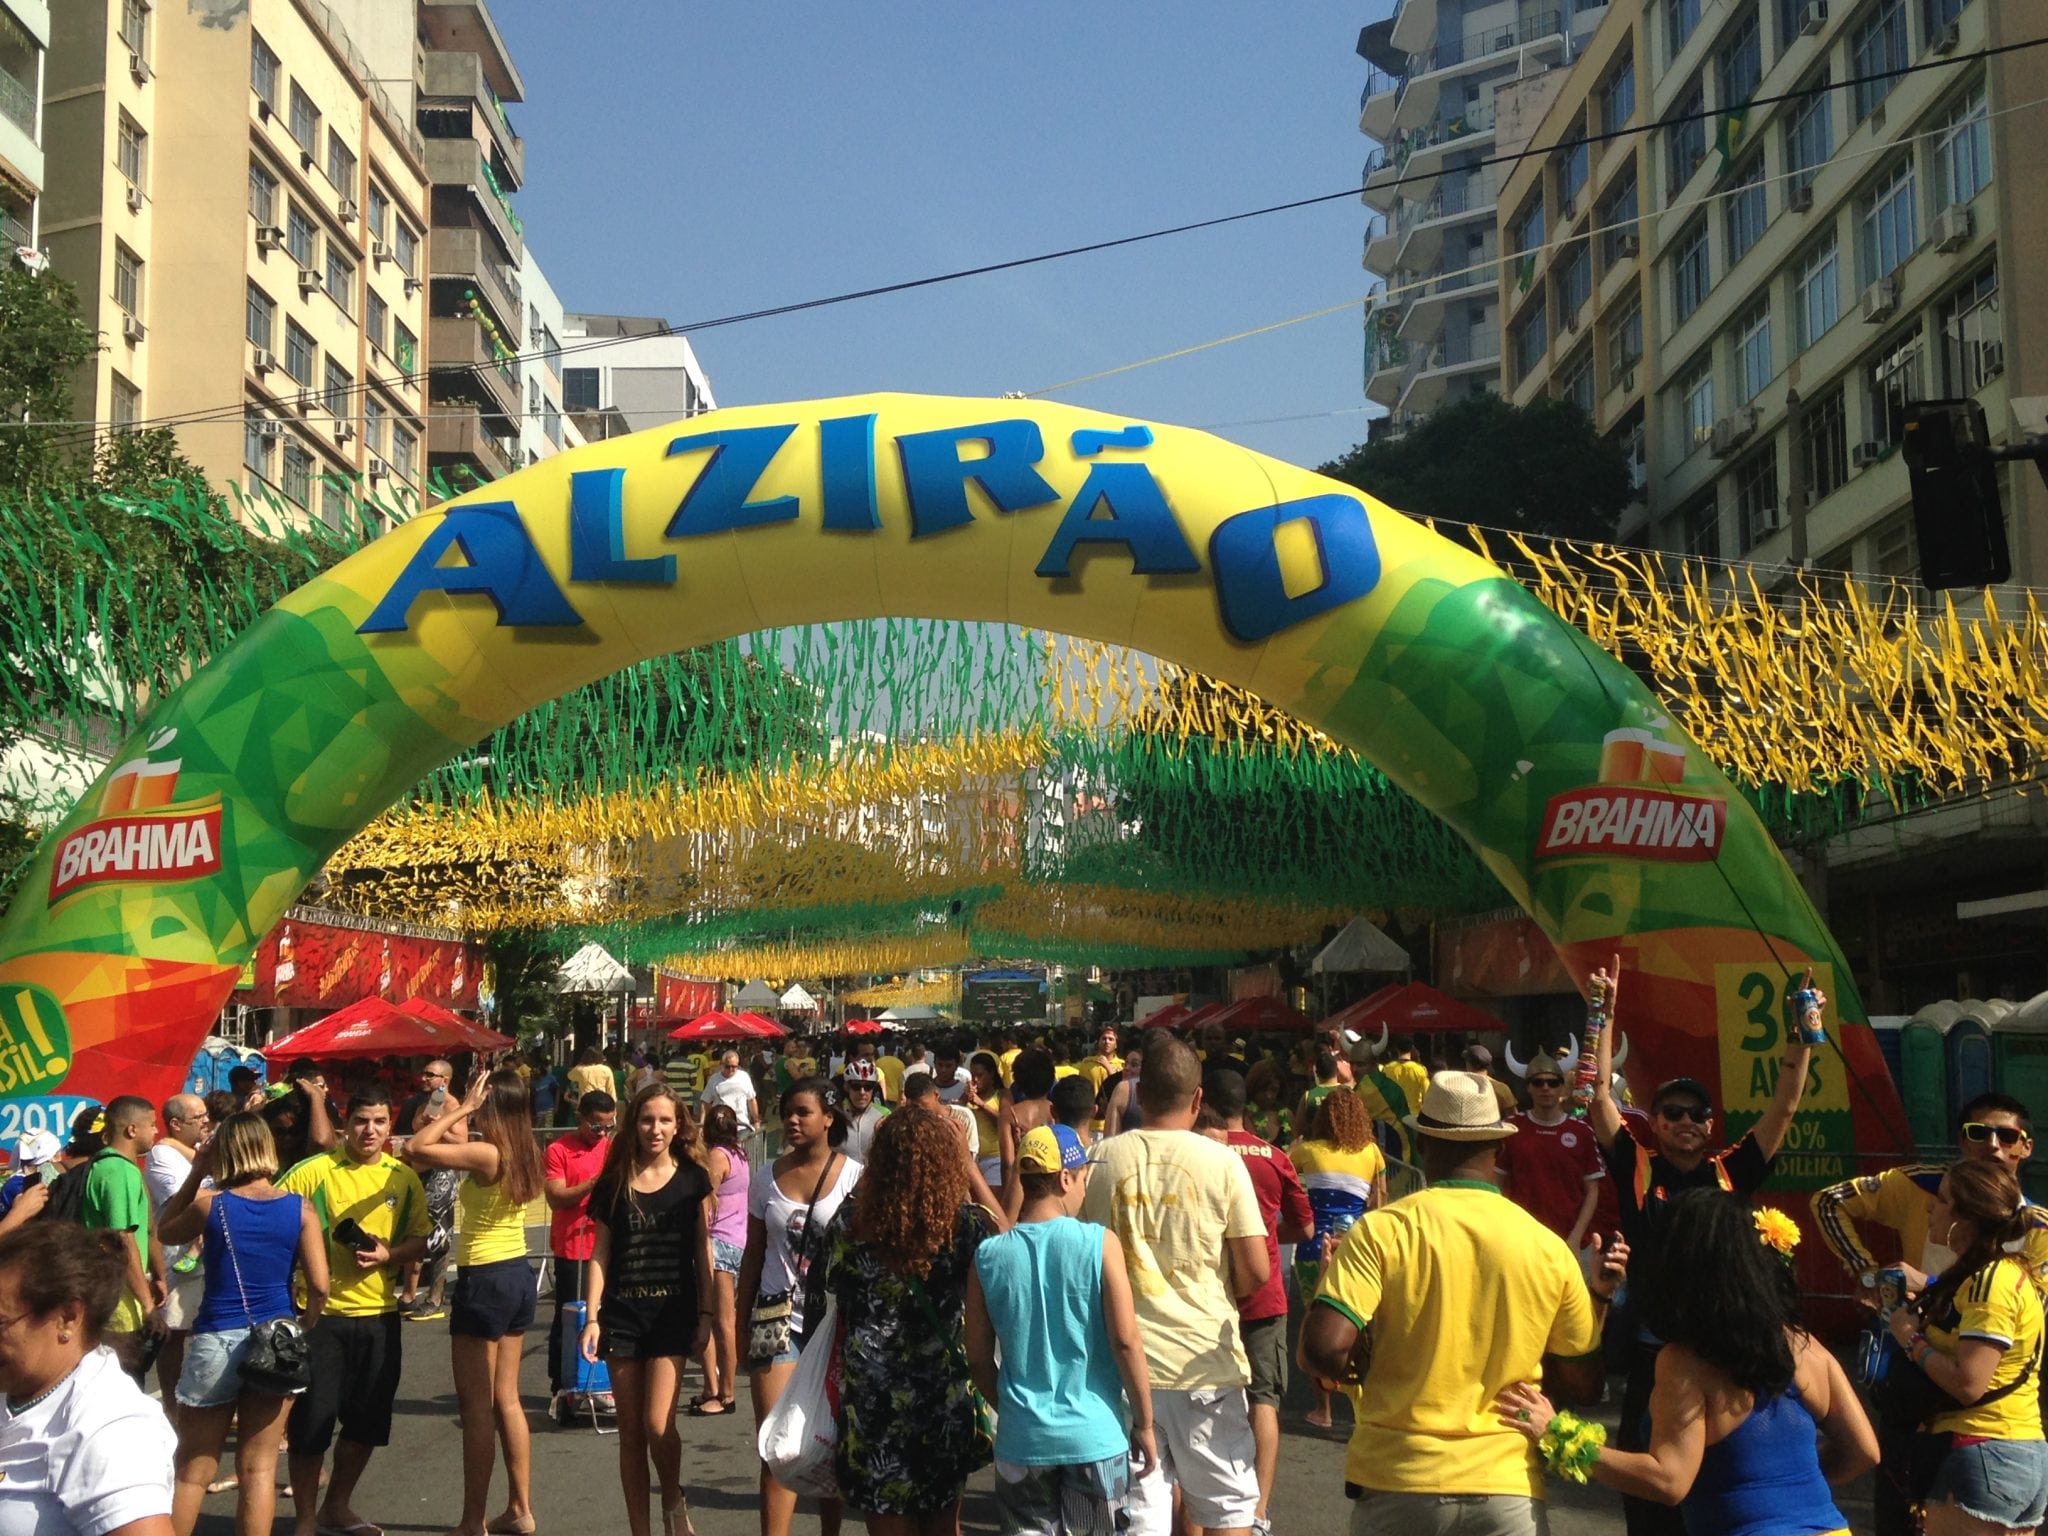 A street celebration during the World Cup in Rio de Janiero, Brazil.